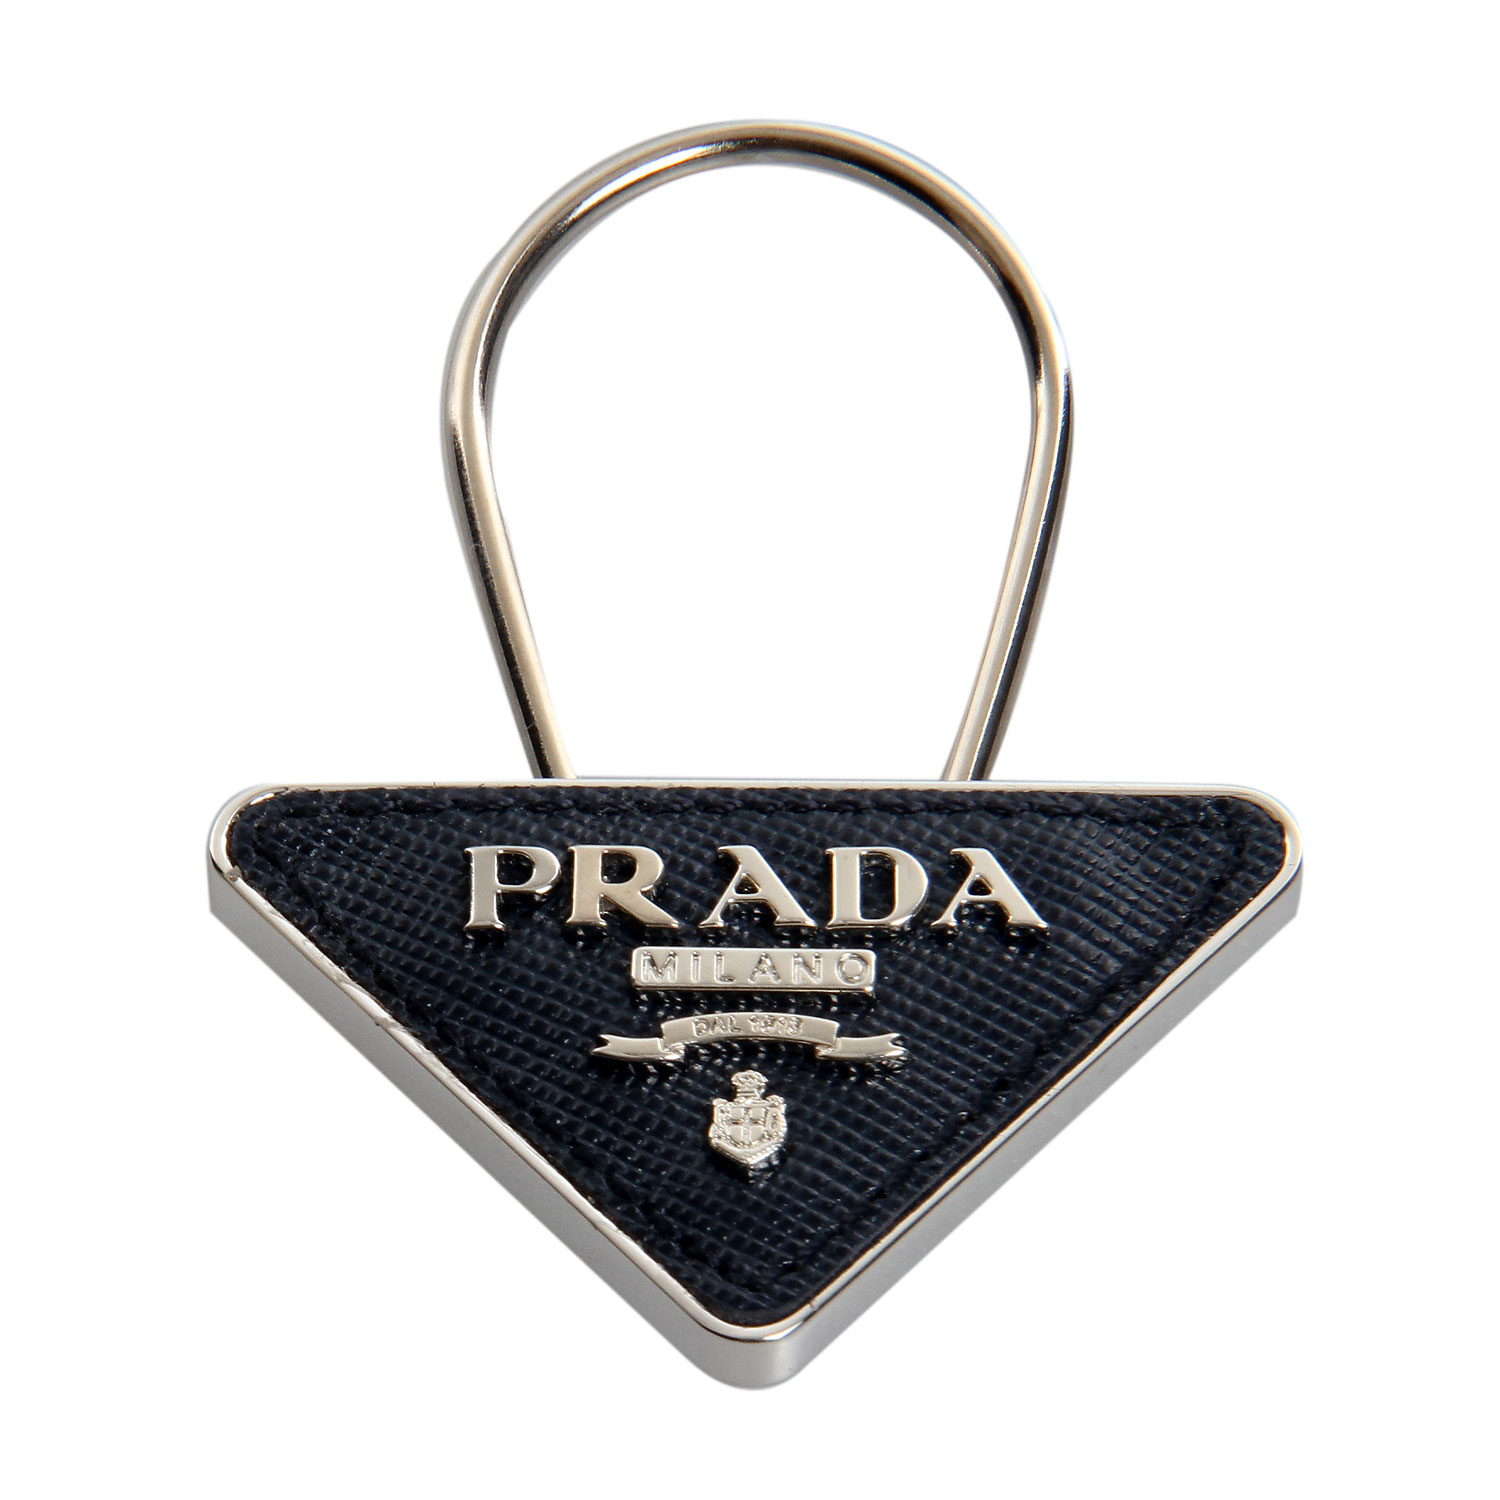 Prada Galleria 经典手袋【报价 价格 评测 怎么样】 -什么值得买